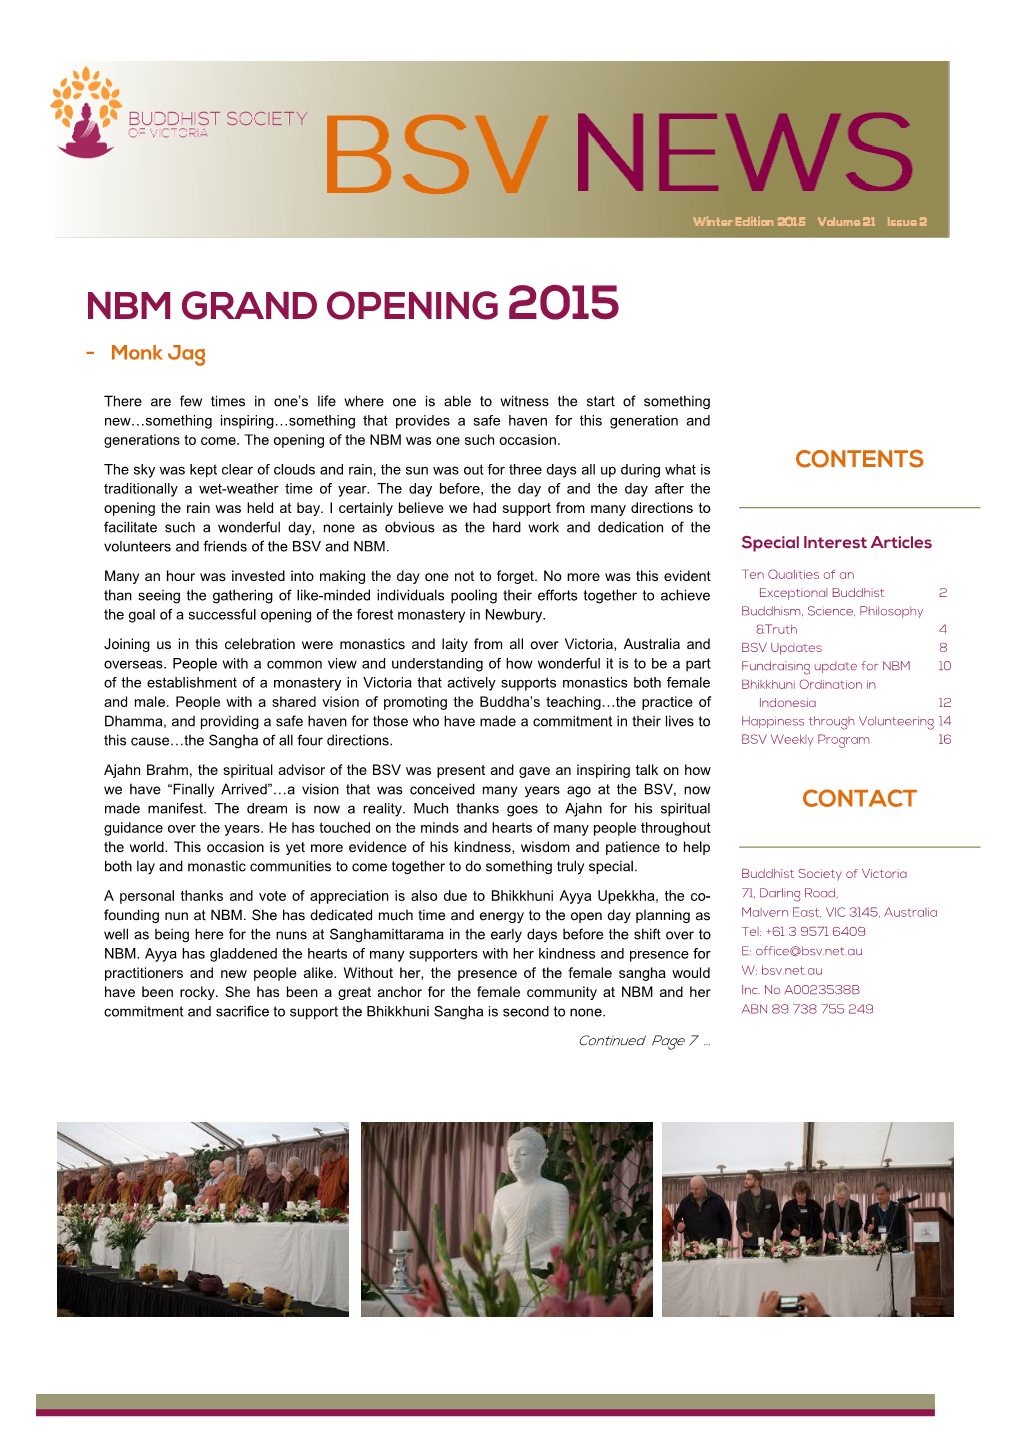 NBM GRAND OPENING 2015 - Monk Jag